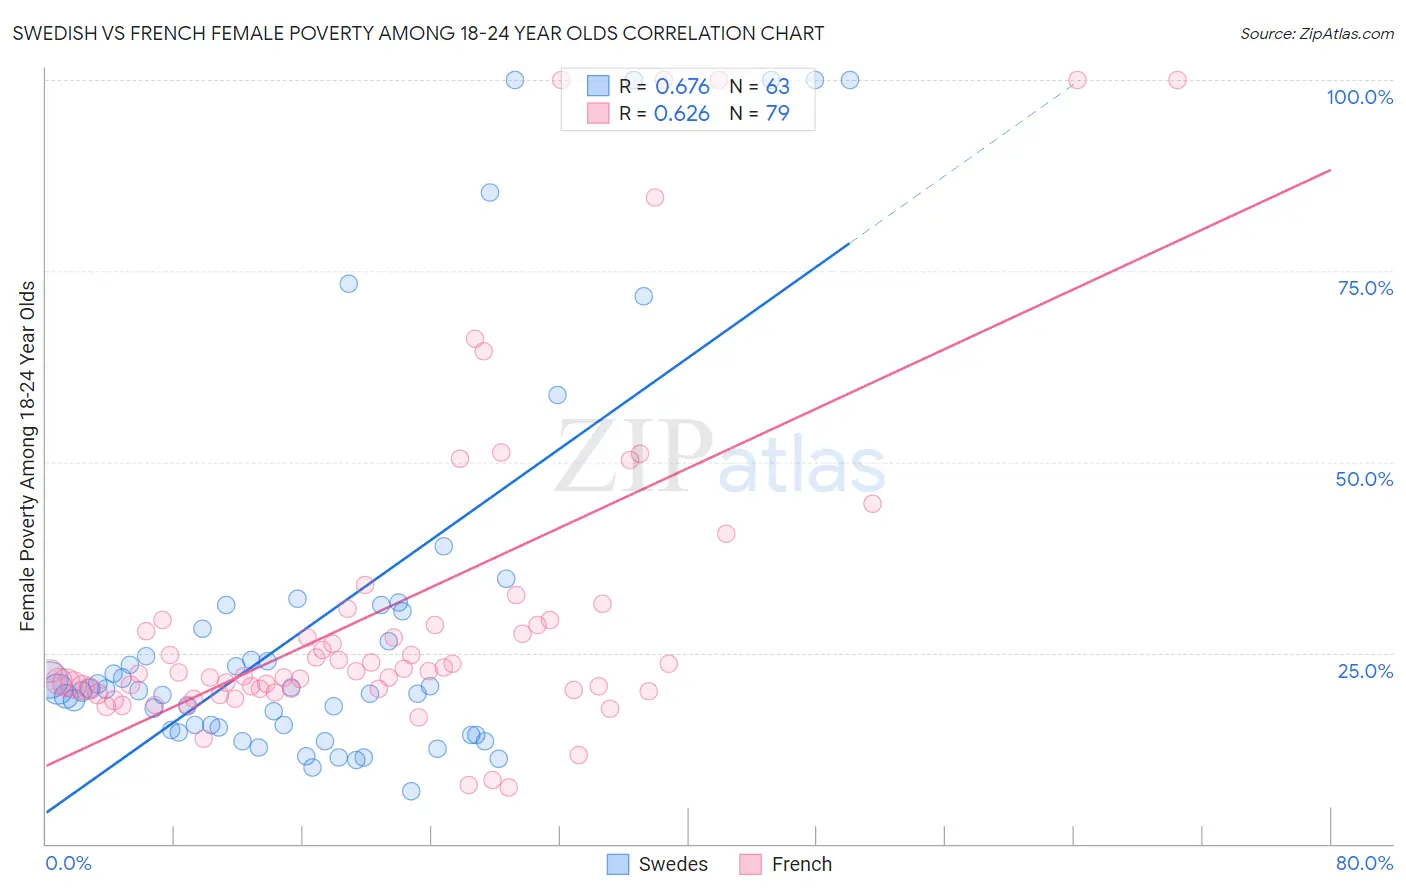 Swedish vs French Female Poverty Among 18-24 Year Olds